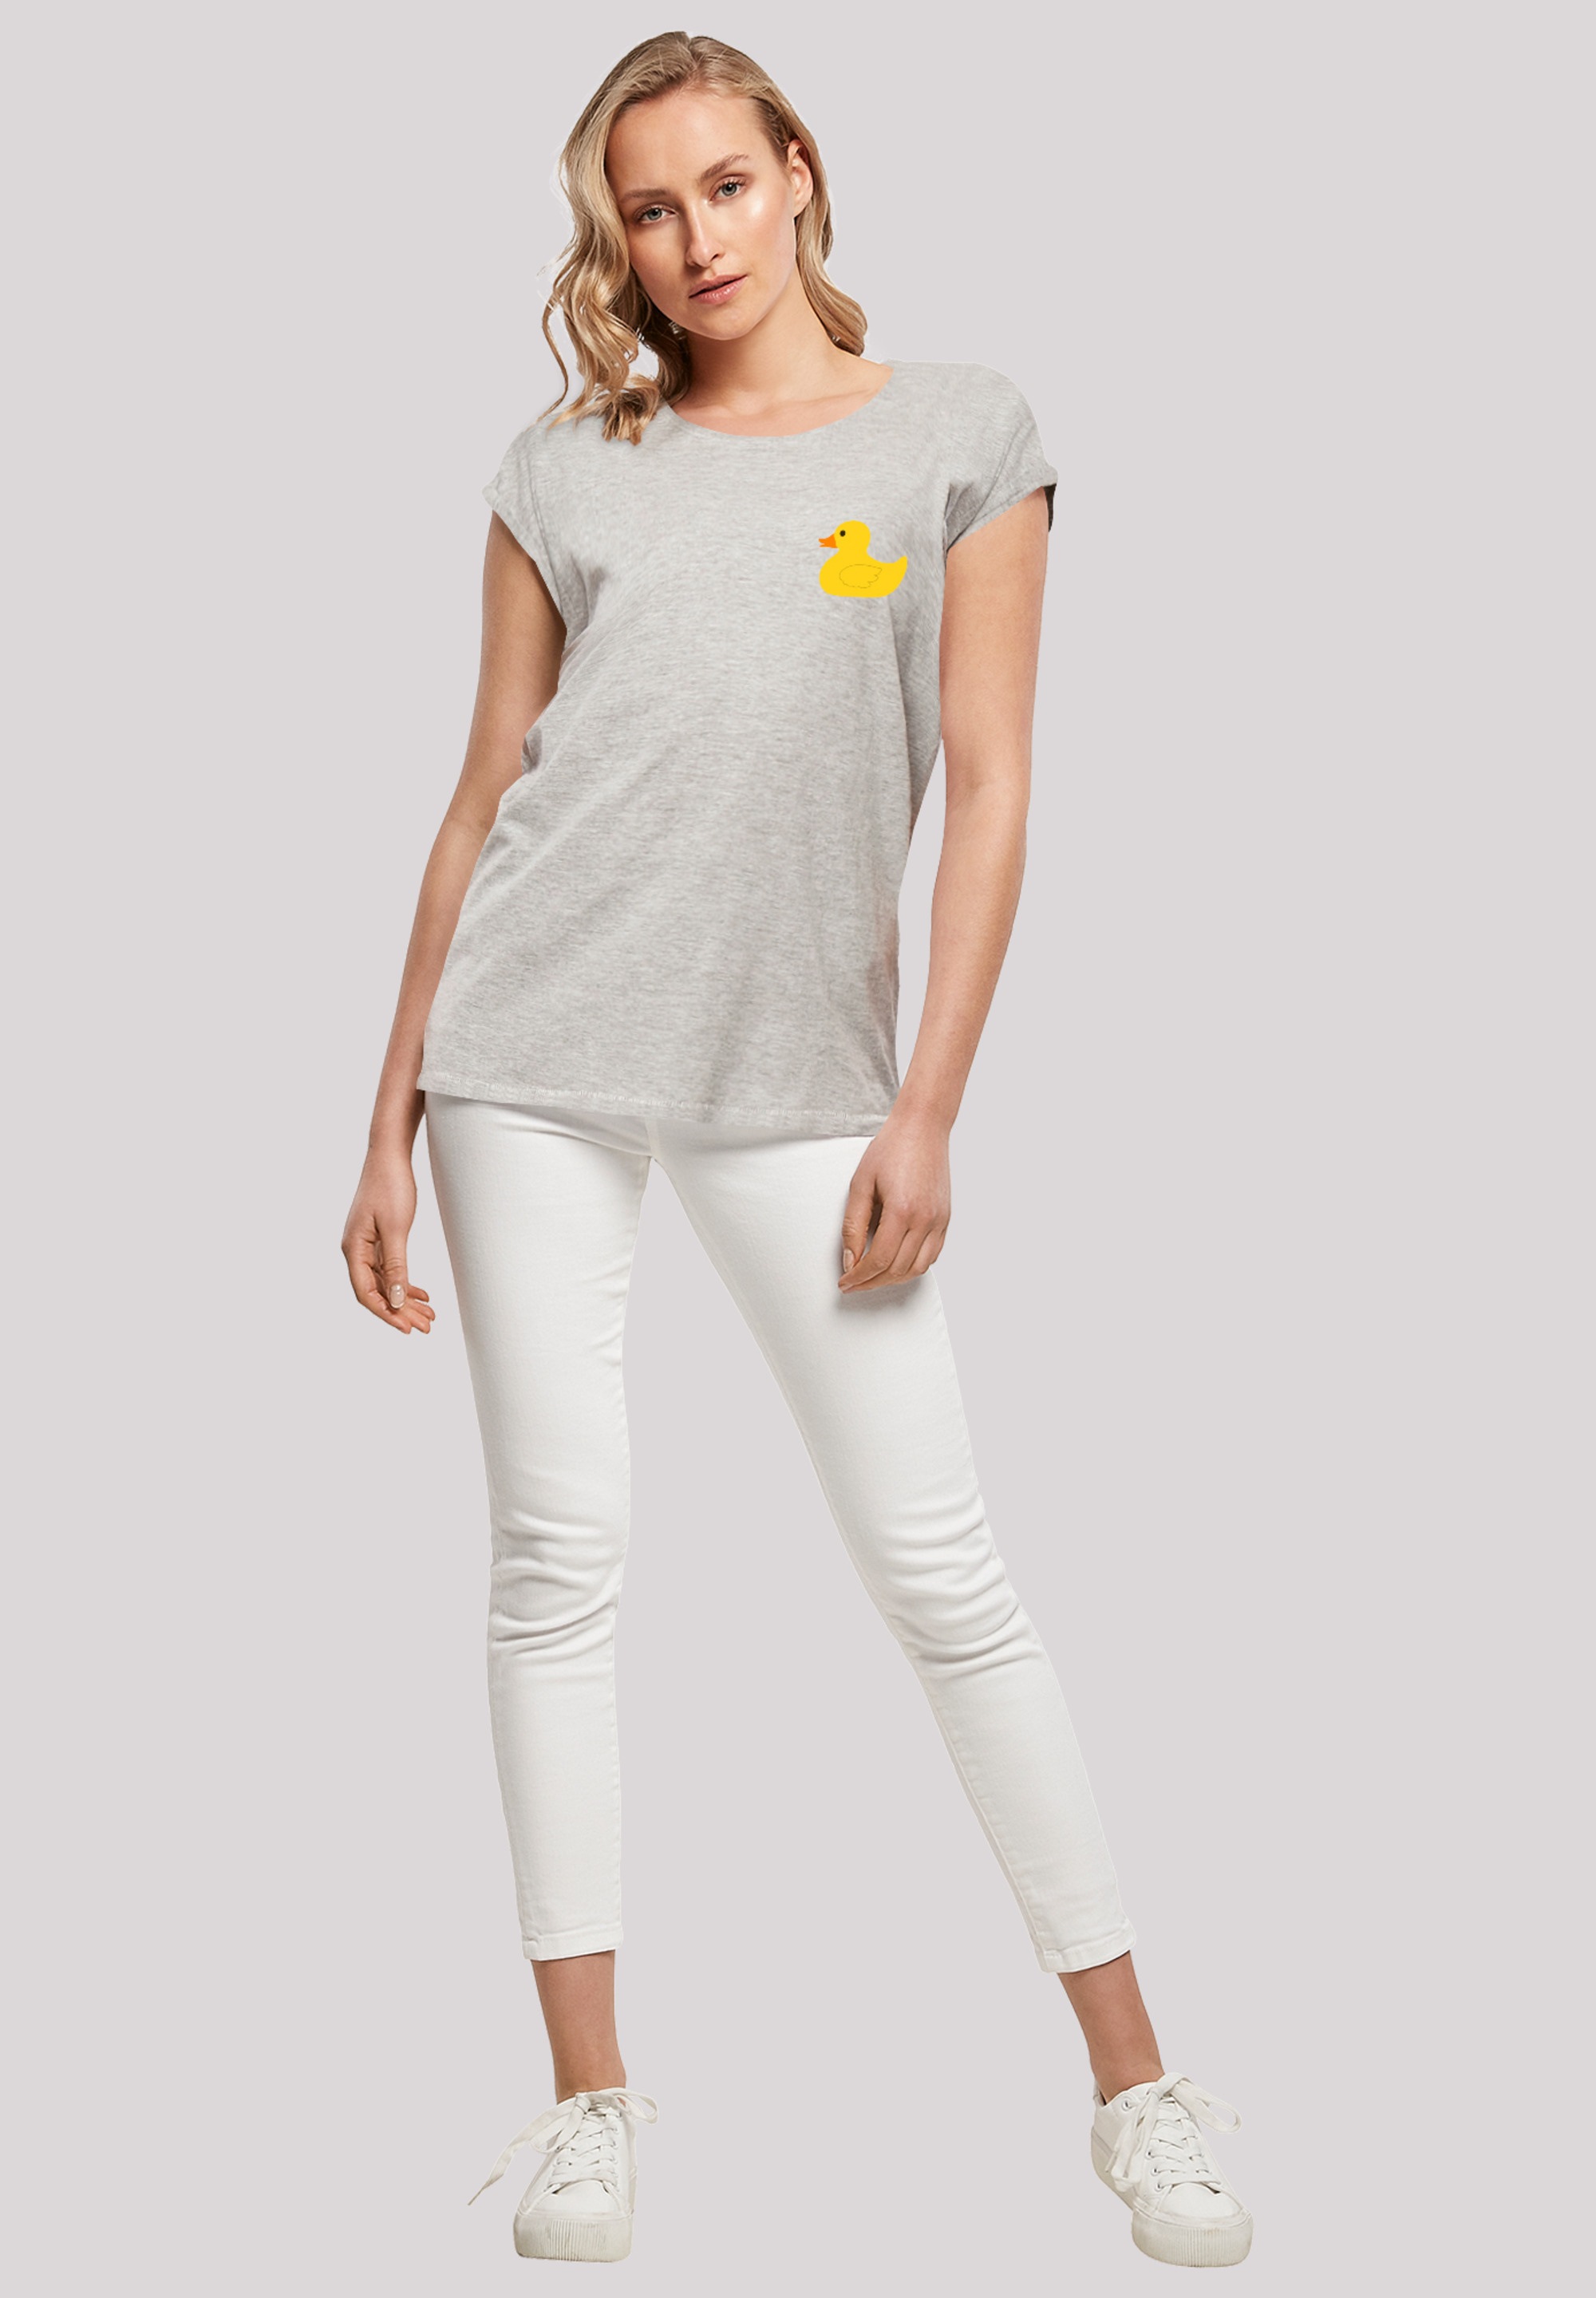 T-Shirt shoppen SLEEVE«, Rubber »Yellow F4NT4STIC Print SHORT Duck